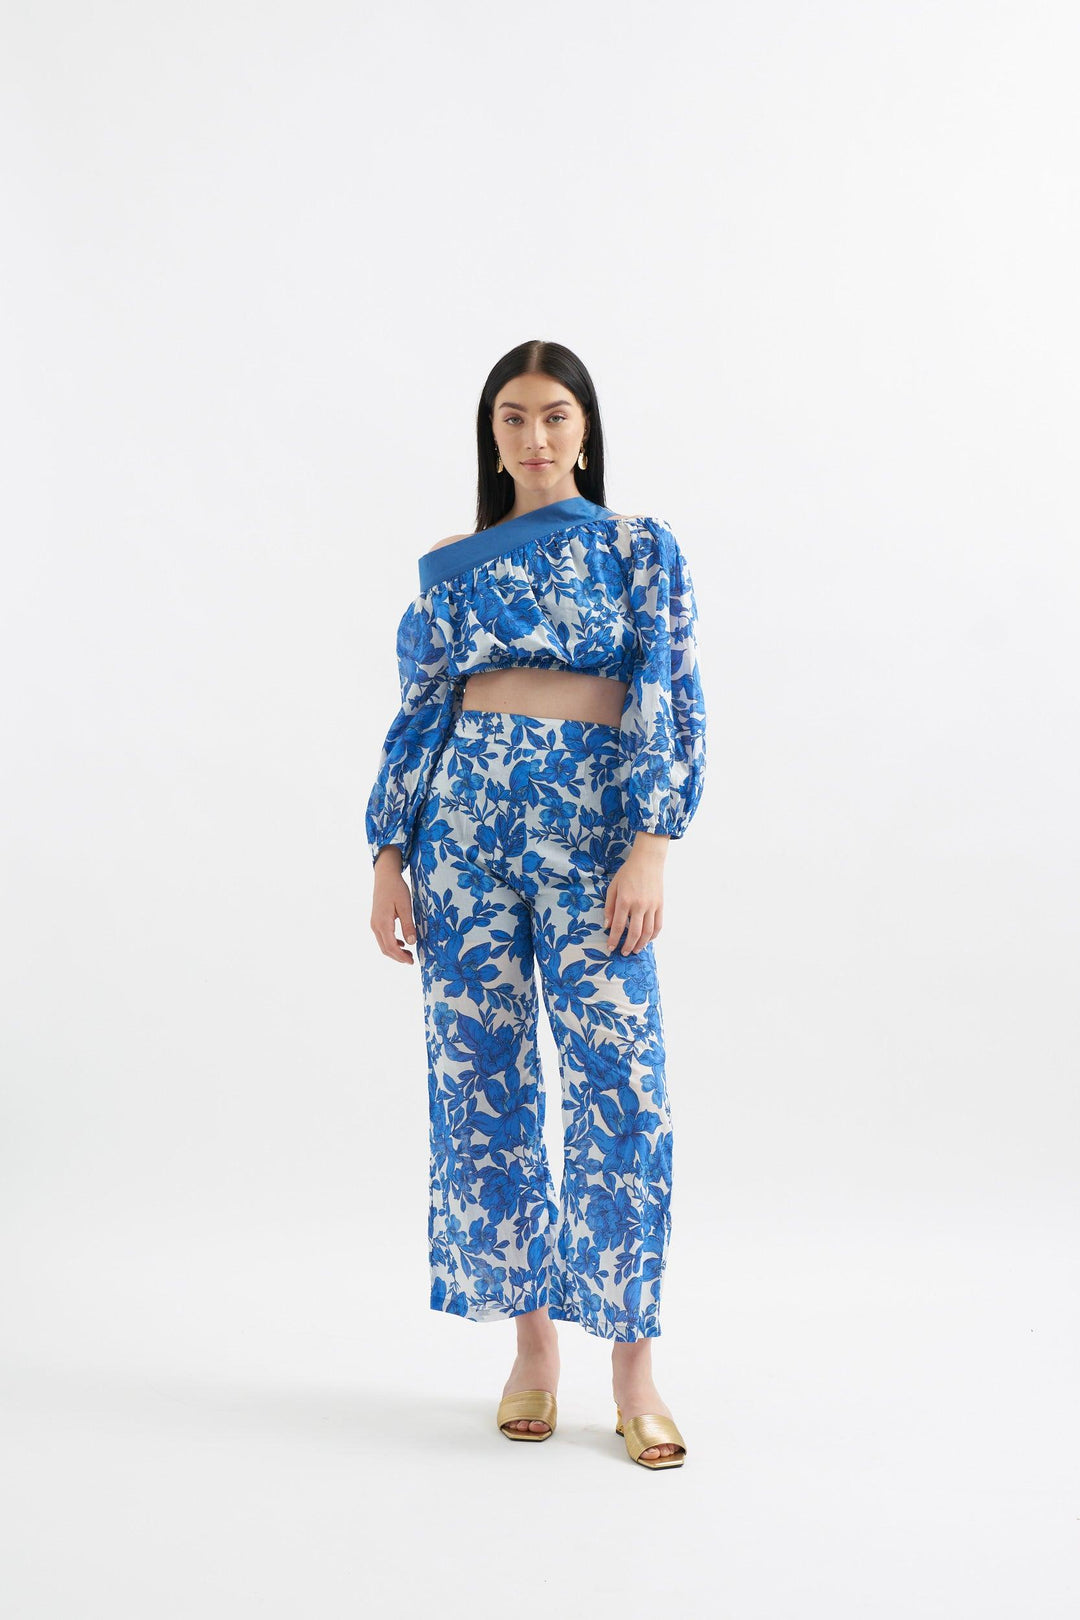 Iris Blue Top - ANI CLOTHING